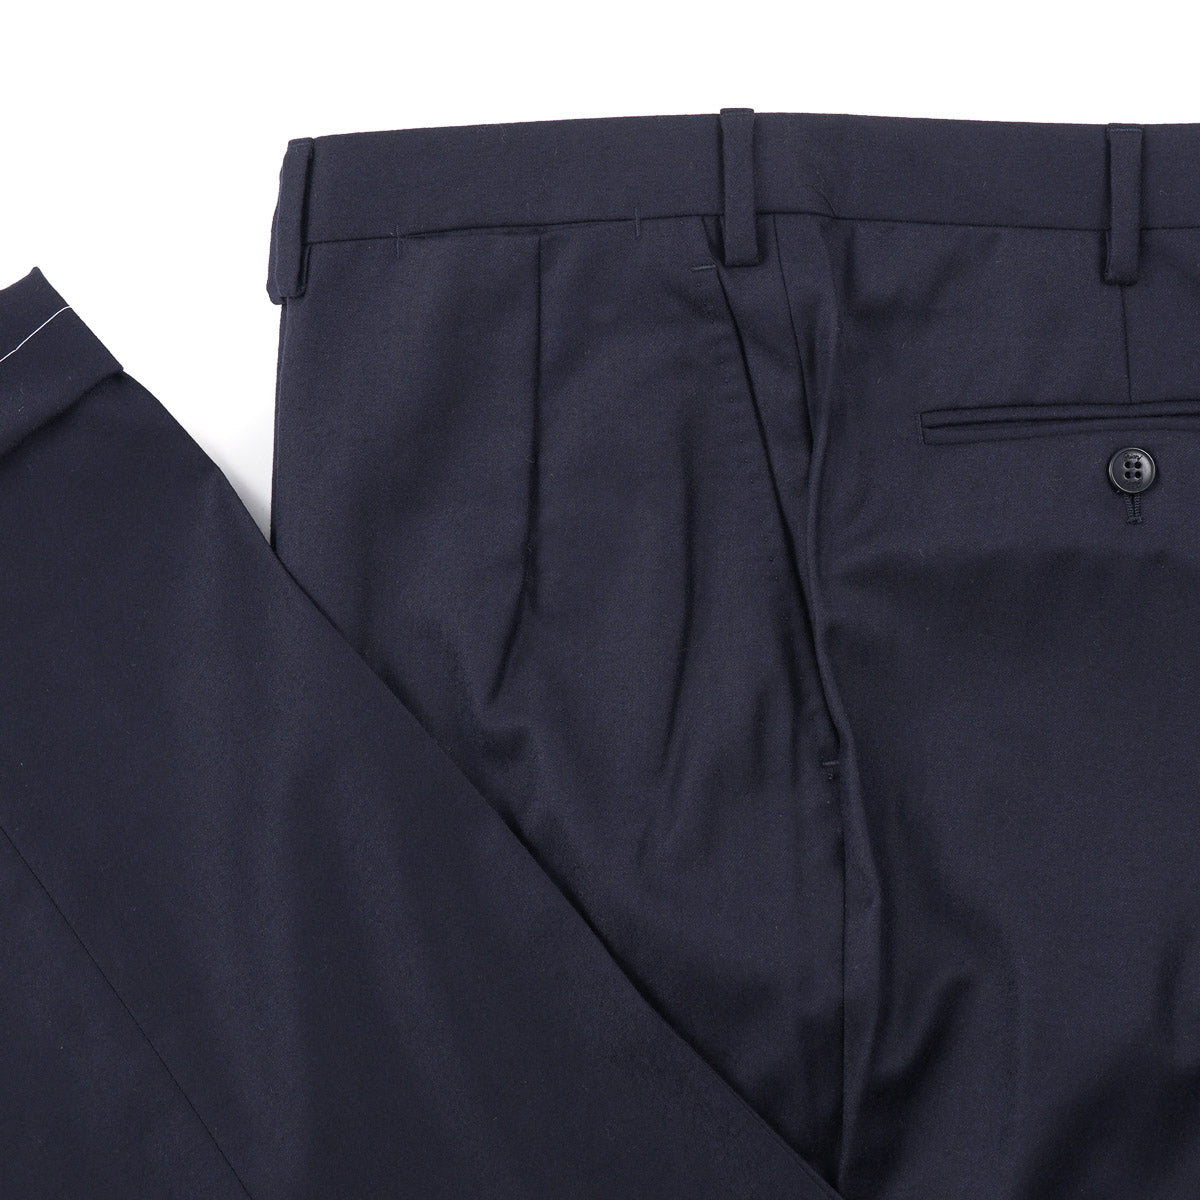 Brioni Super 150s Wool Dress Pants - Top Shelf Apparel